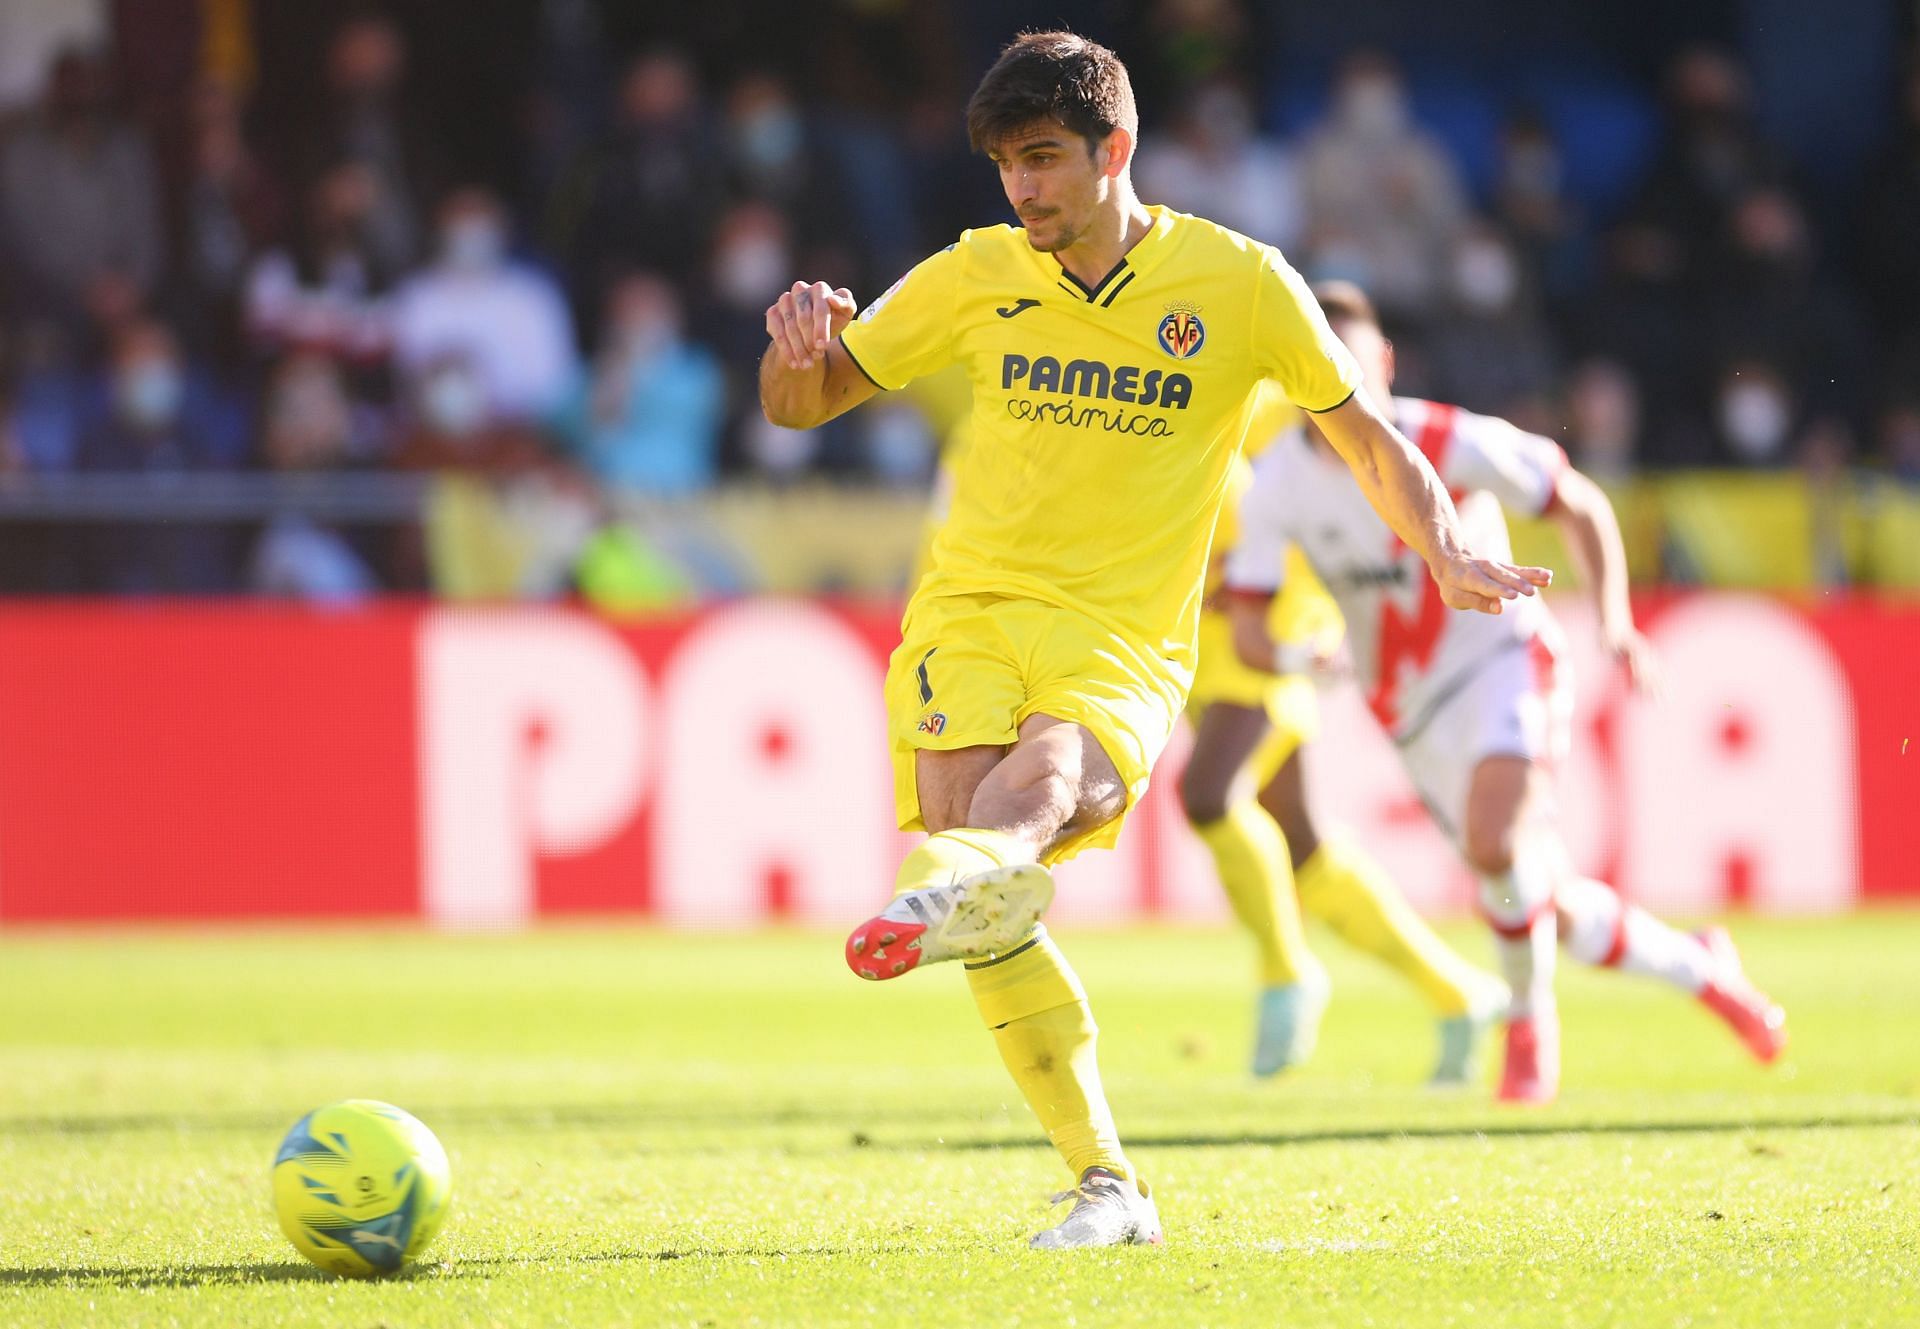 Moreno has been superb for Villarreal